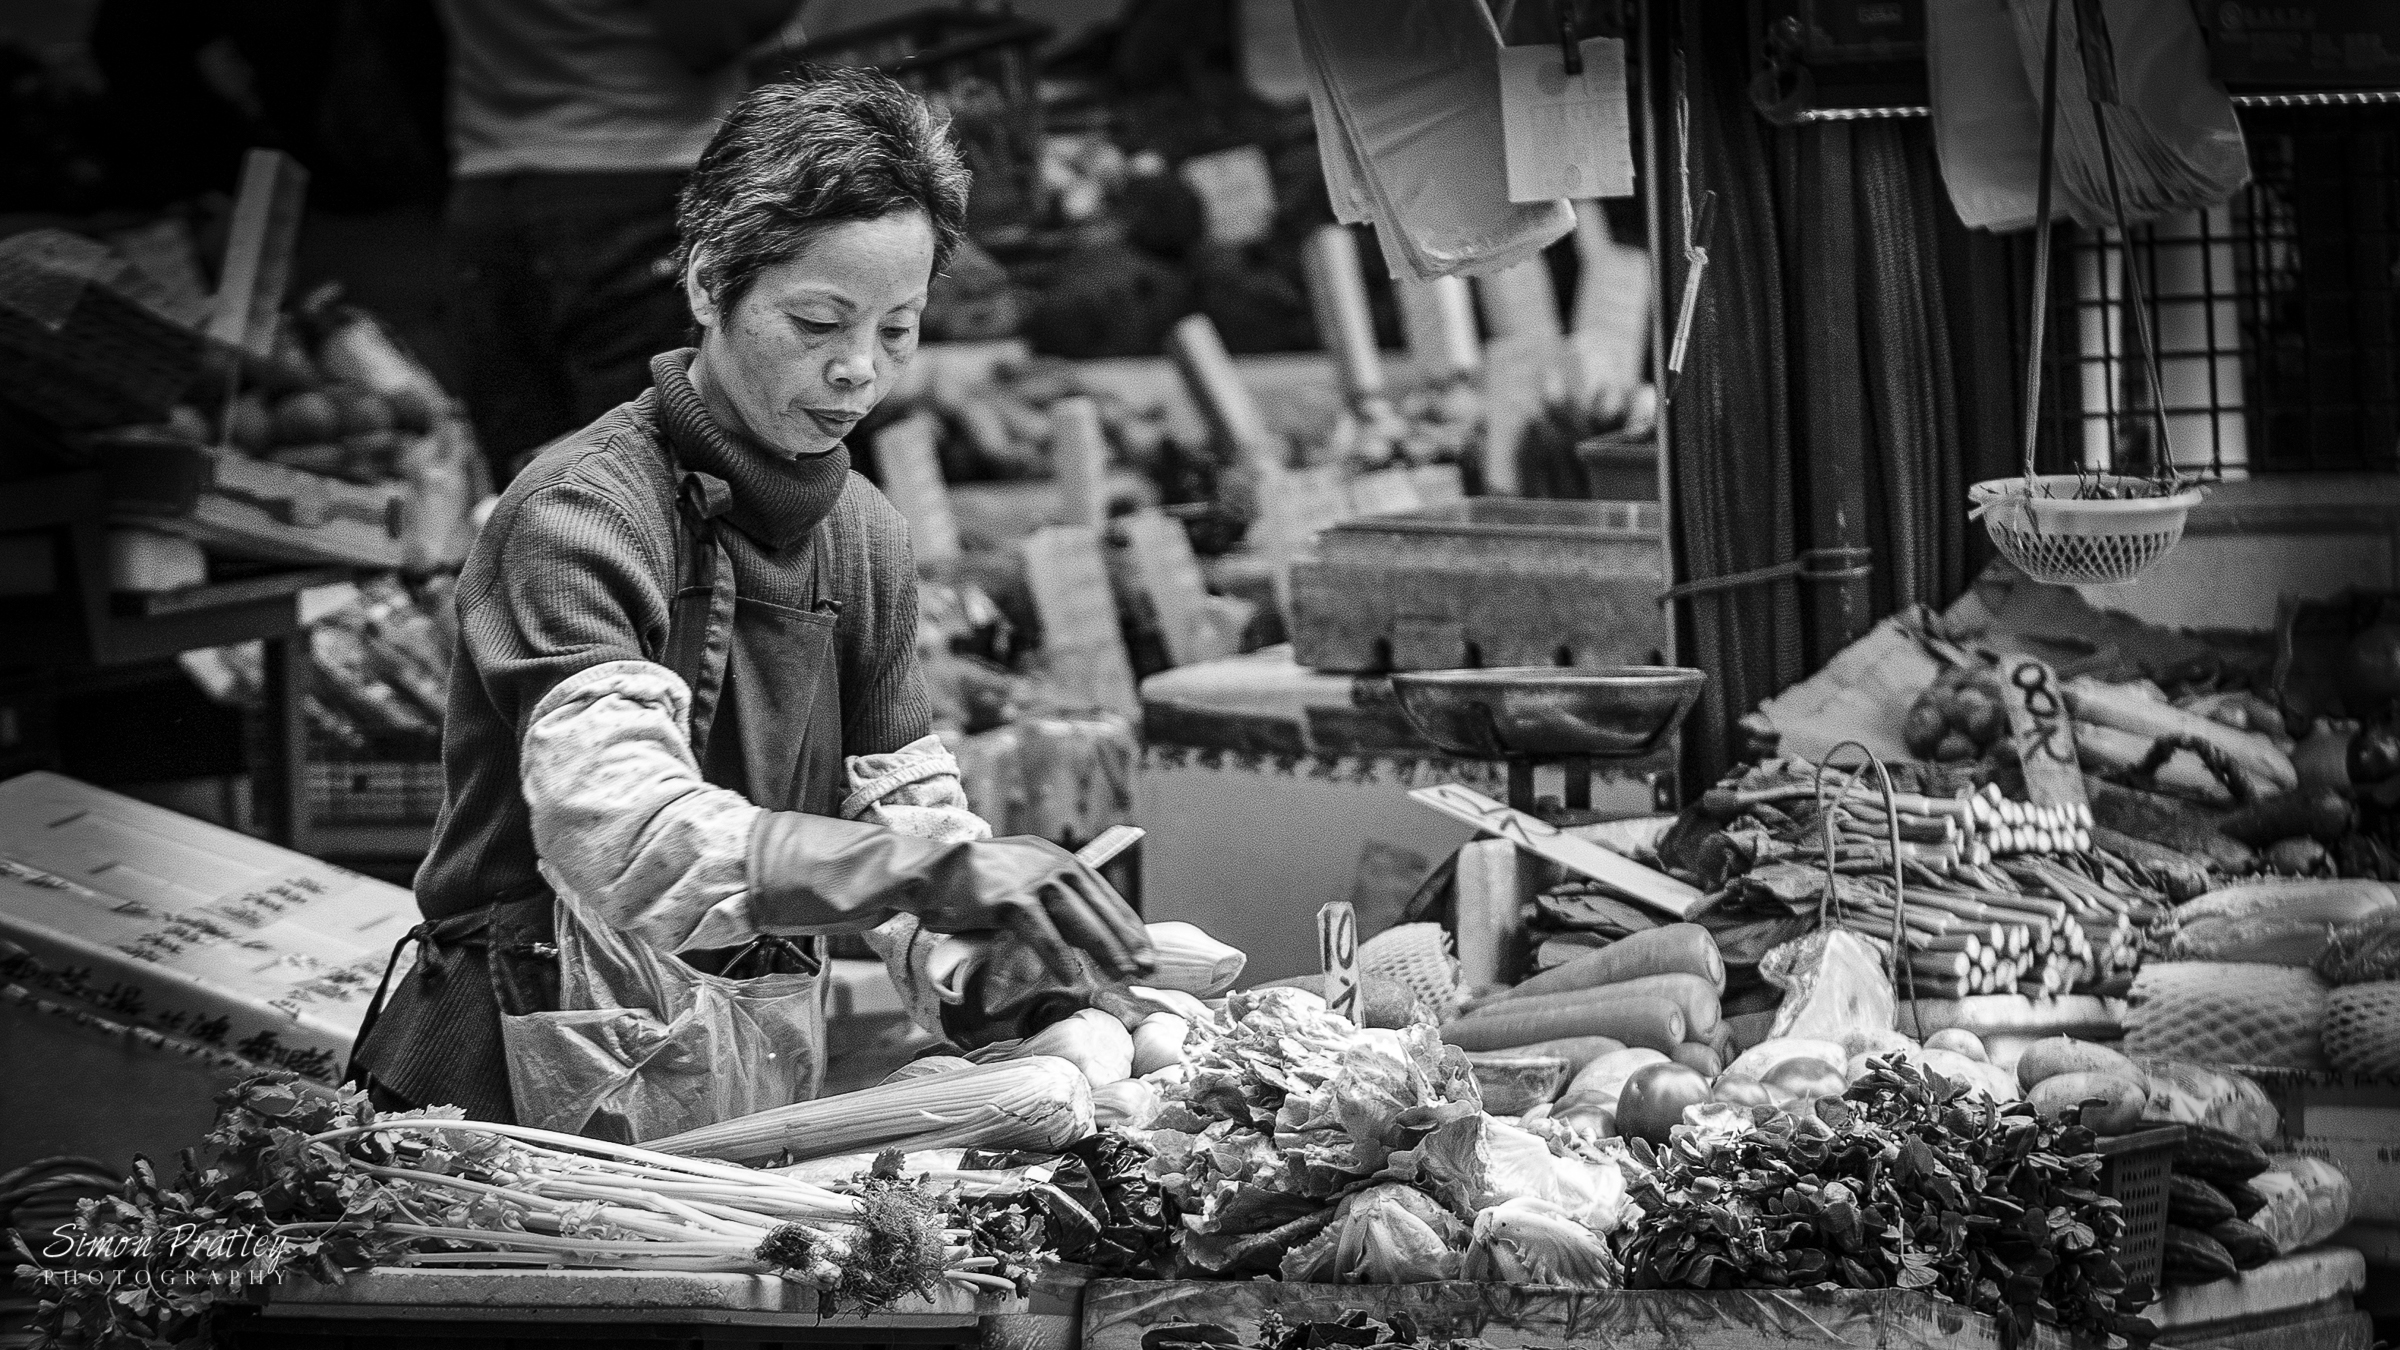 Preparing Vegetables - Street Market